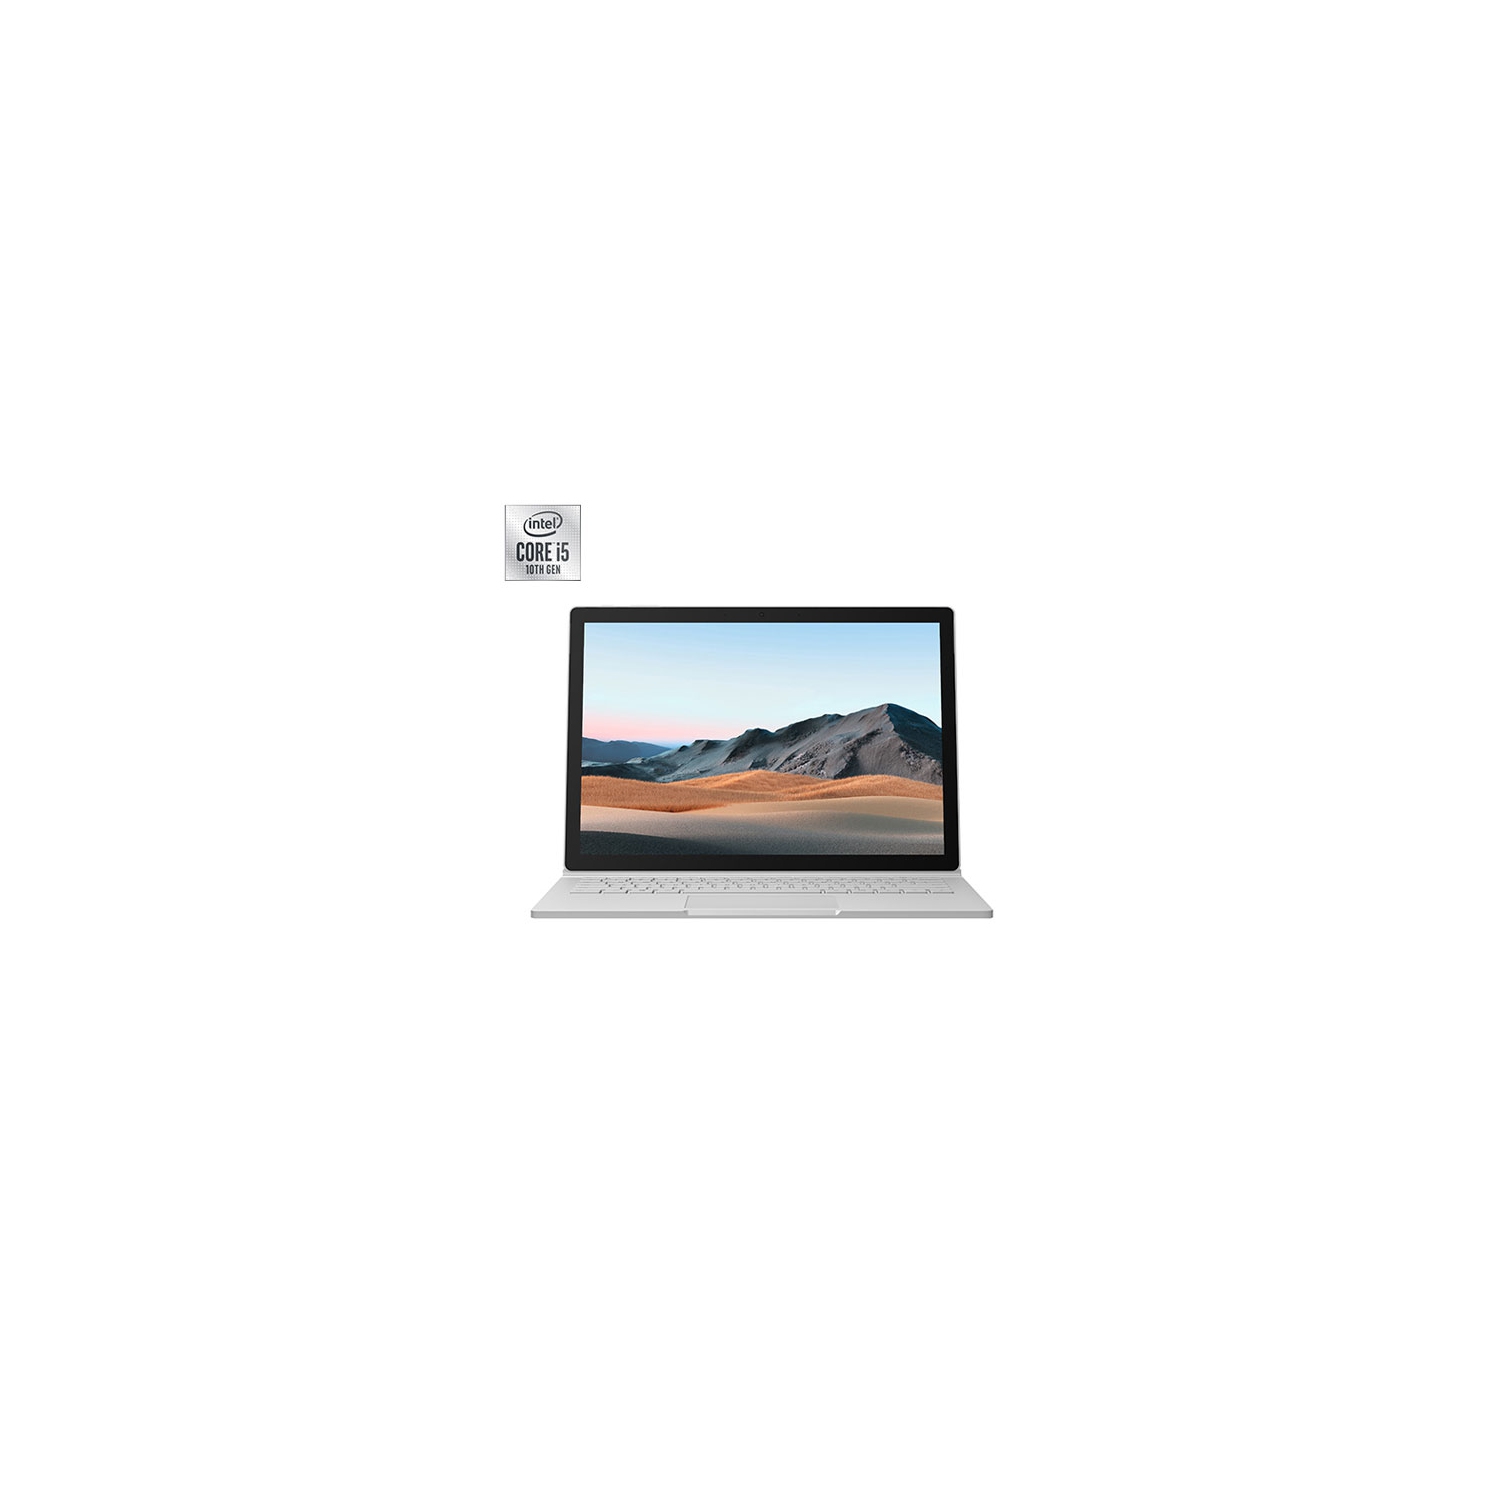 Open Box - Microsoft Surface Book 3 13.5" 2-in-1 Laptop - Platinum (Intel Ci5-1035G7/256GB SSD/8GB RAM) - English